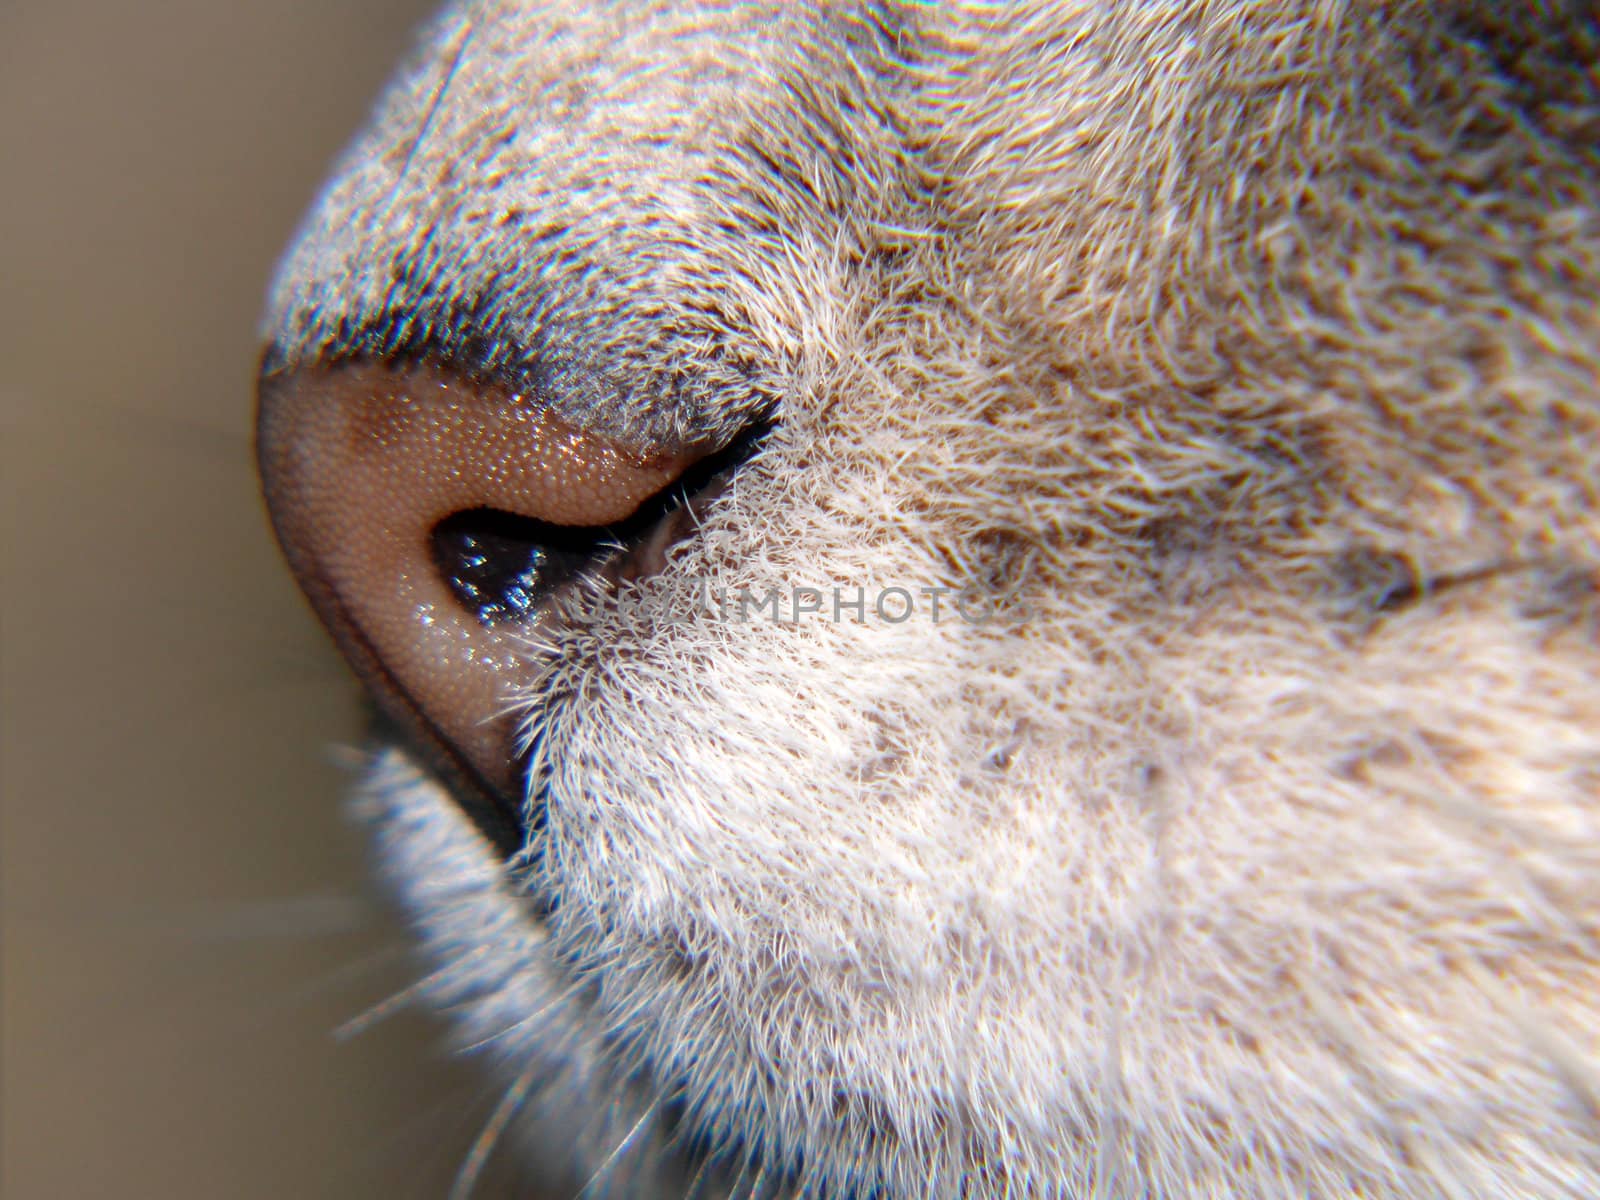 Extreme closeup of a grey cat's nose.